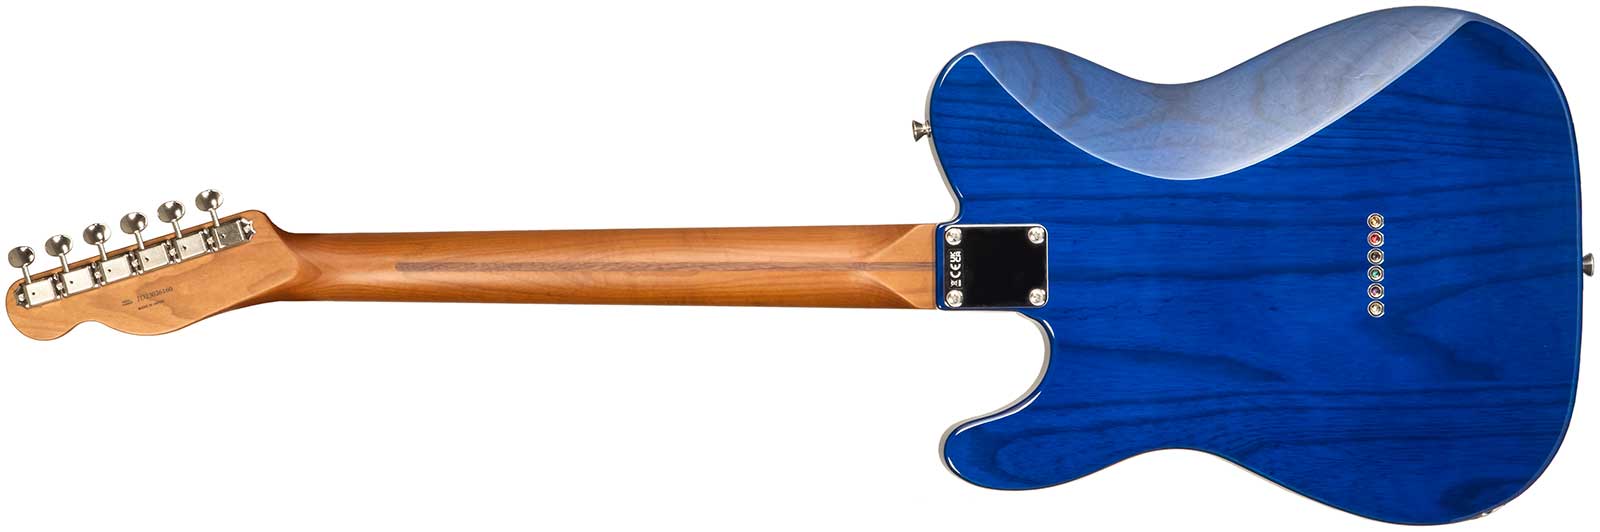 Fender Tele Hybrid Ii Jap 2s Ht Mn - Aqua Blue - Guitarra eléctrica con forma de tel - Variation 1